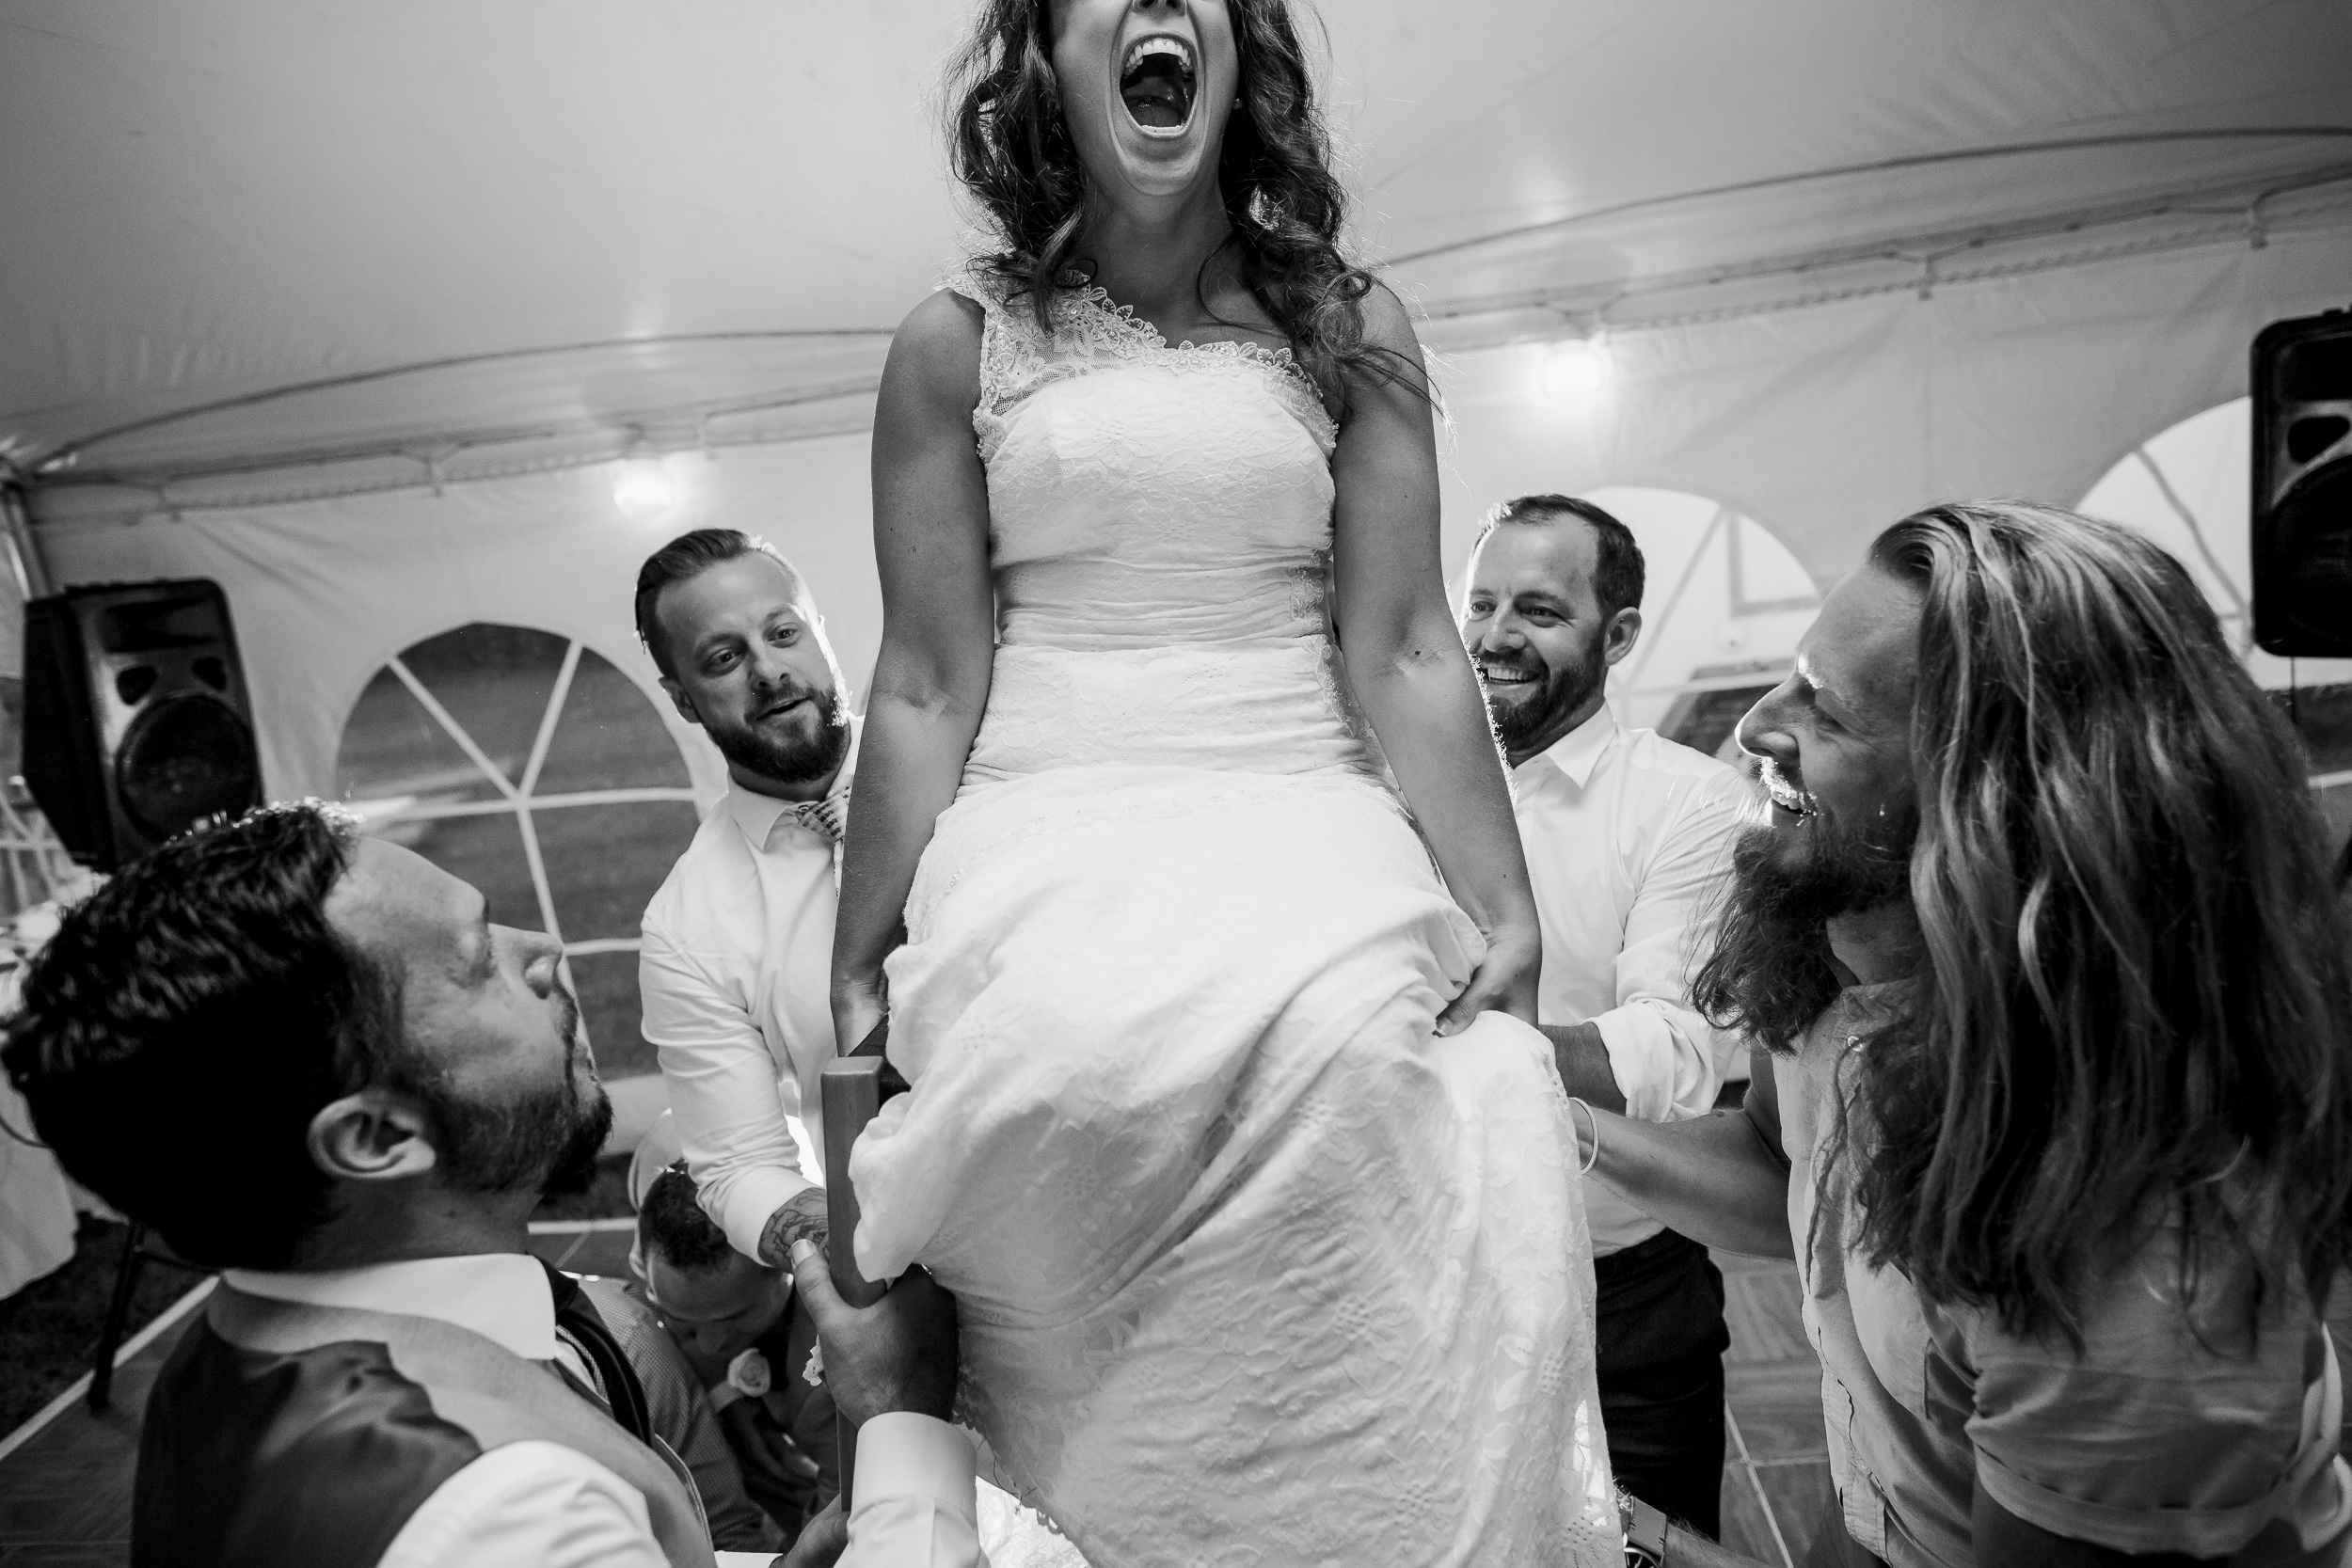 Hora dancing - Jewish wedding dancing - jewish wedding - jewish chair dance